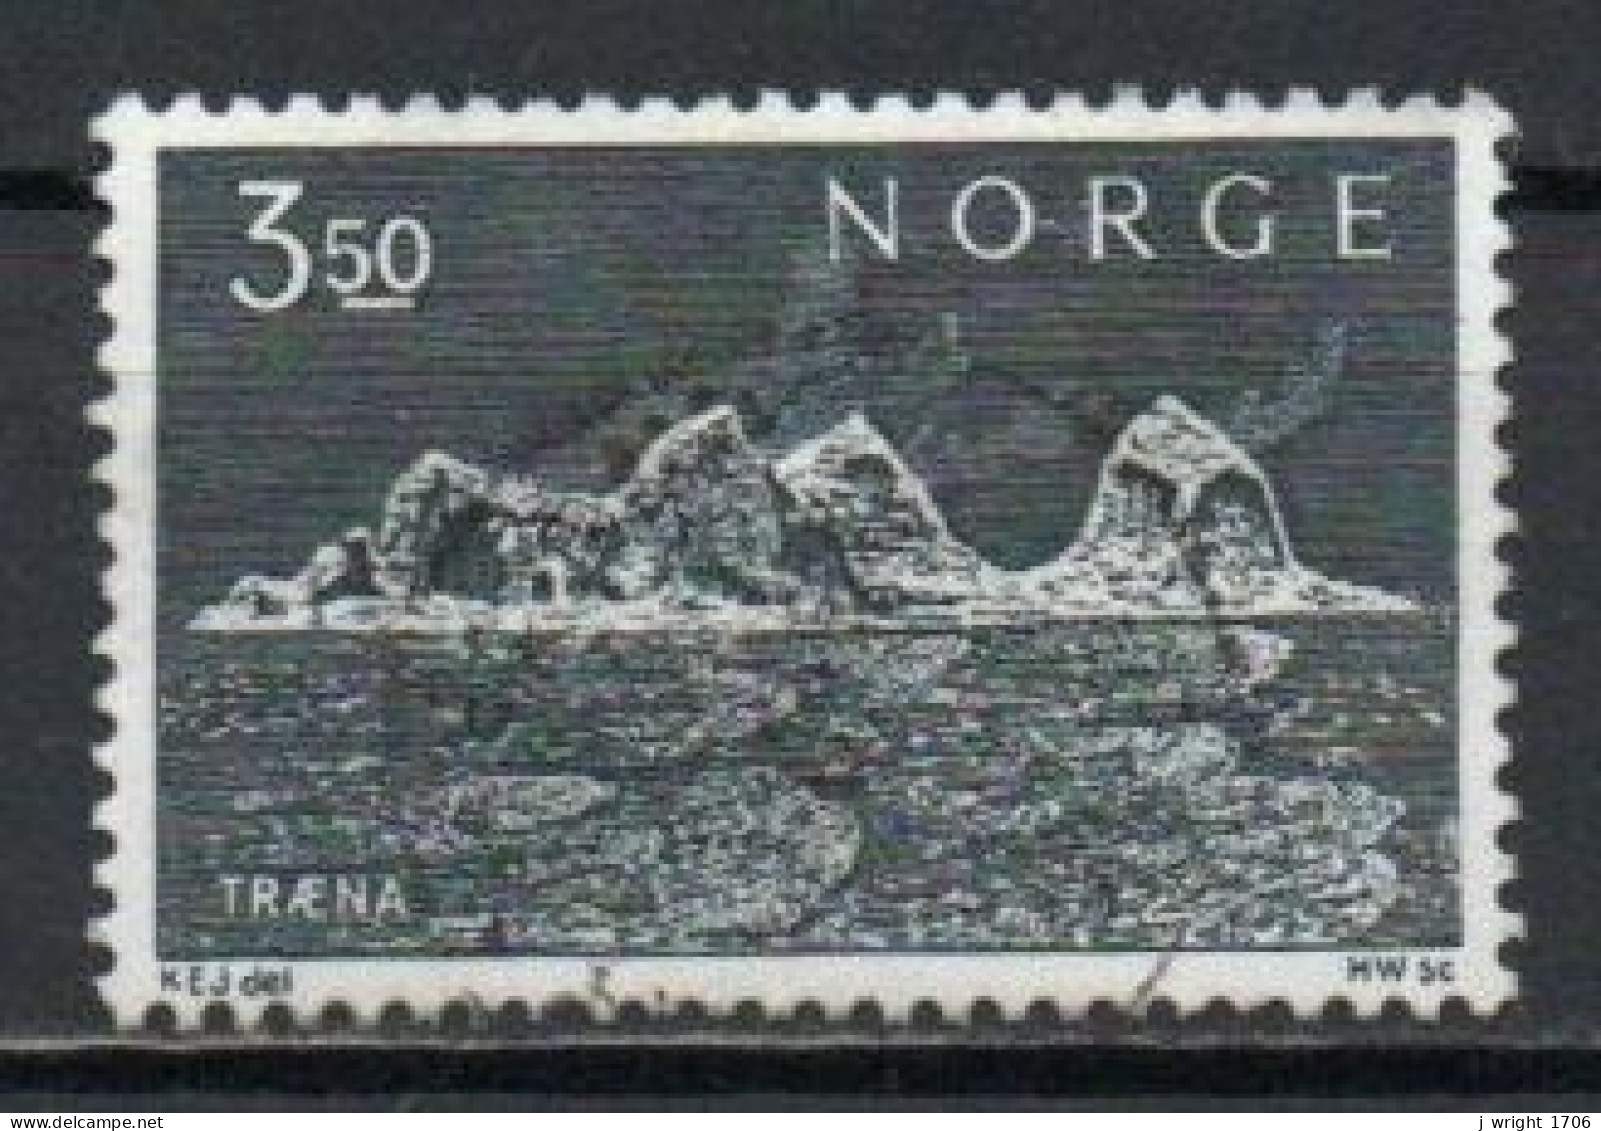 Norway, 1969, Traena Islands, Set, USED - Used Stamps